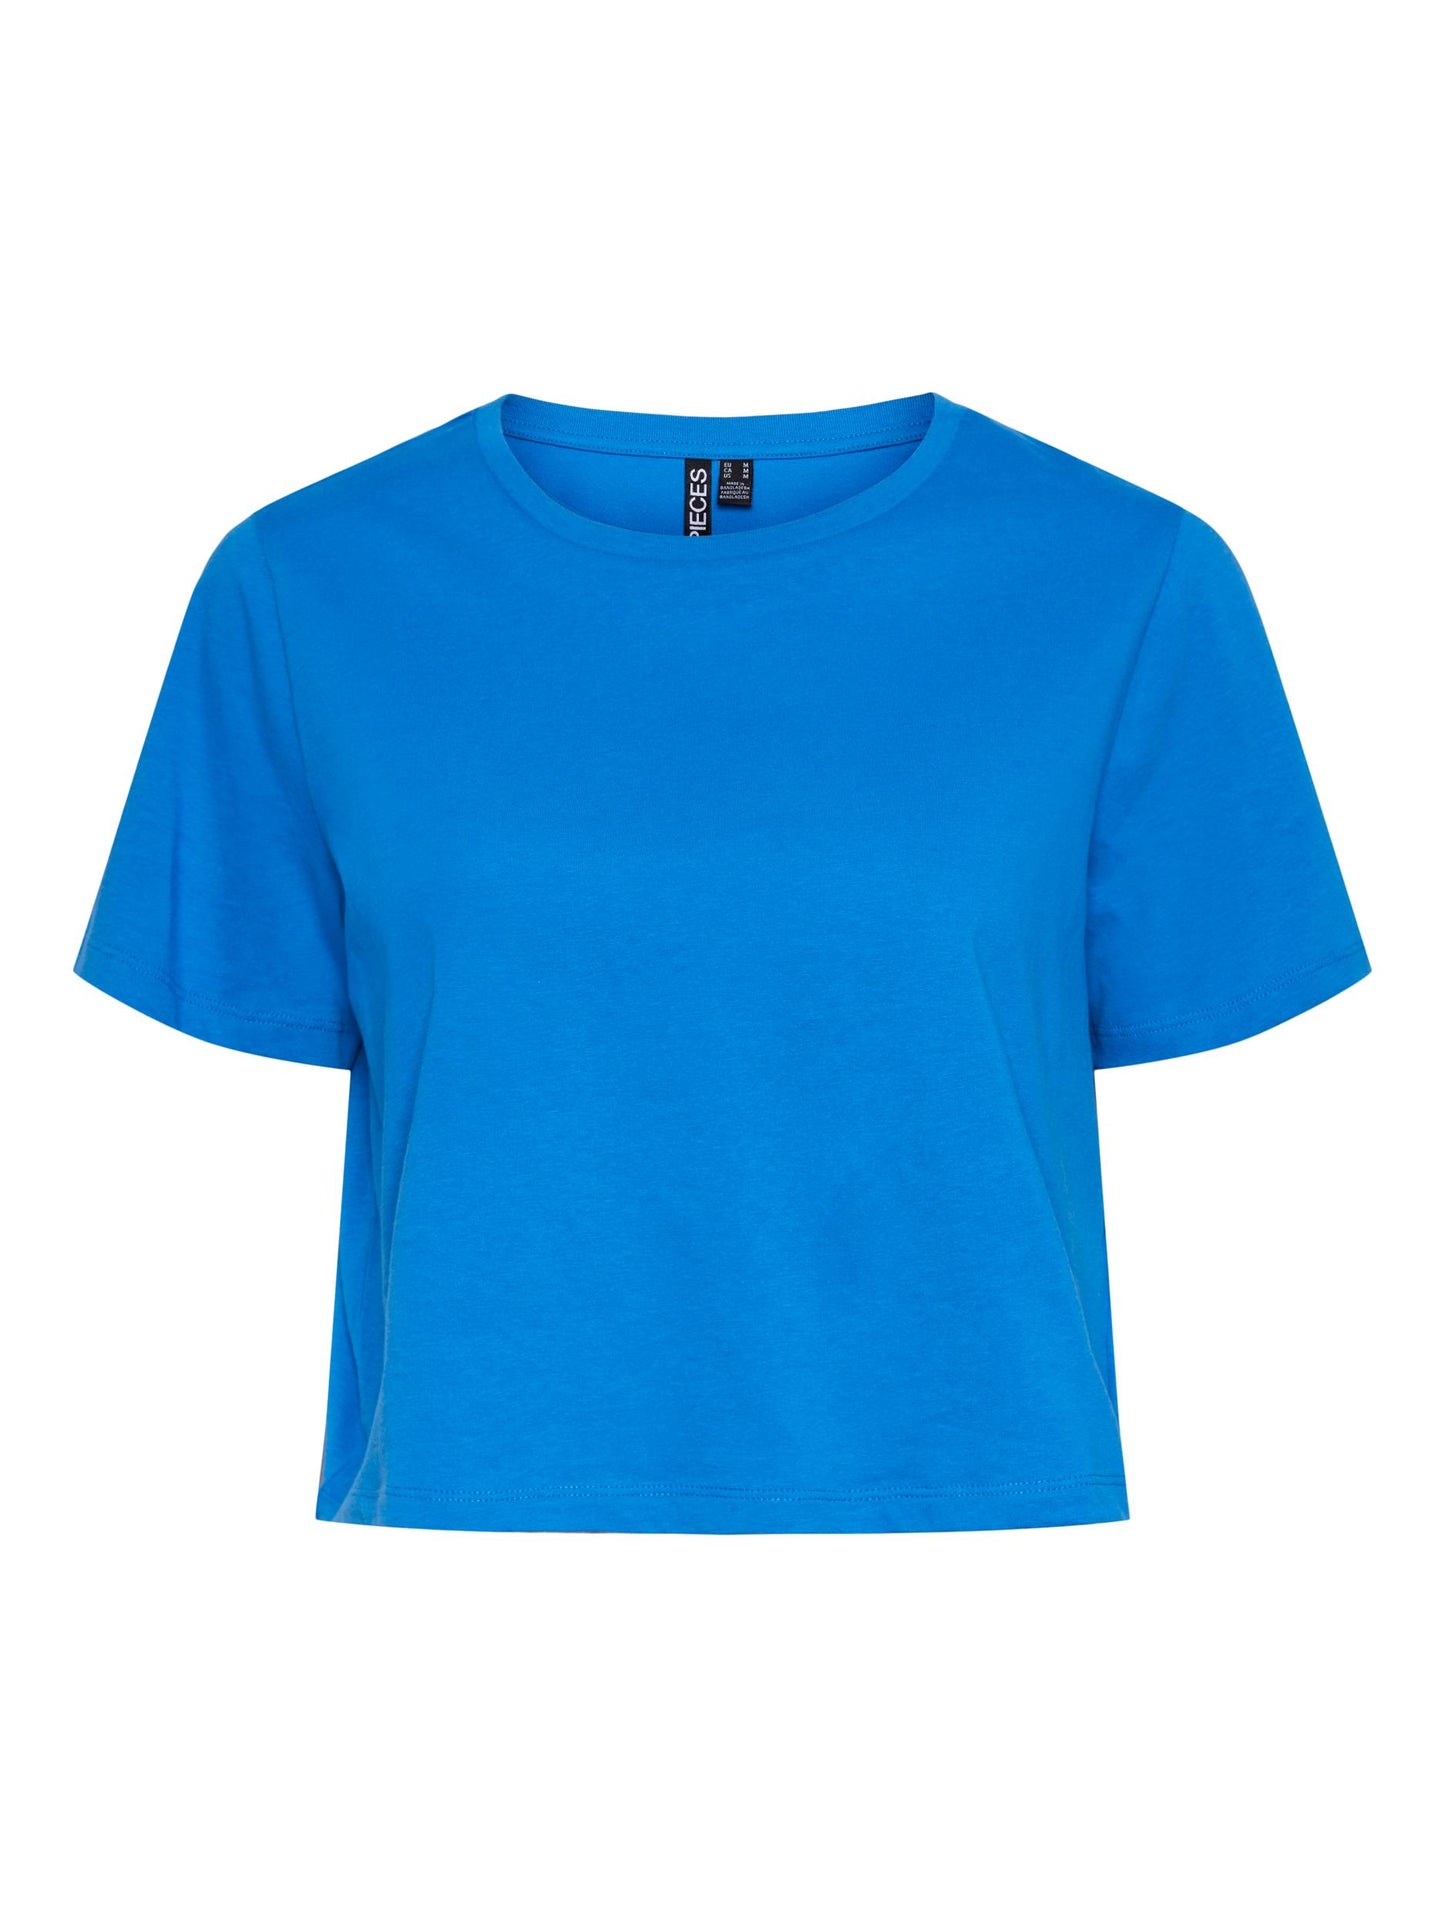 
                  
                    PCSARA French Blue T-Shirt
                  
                